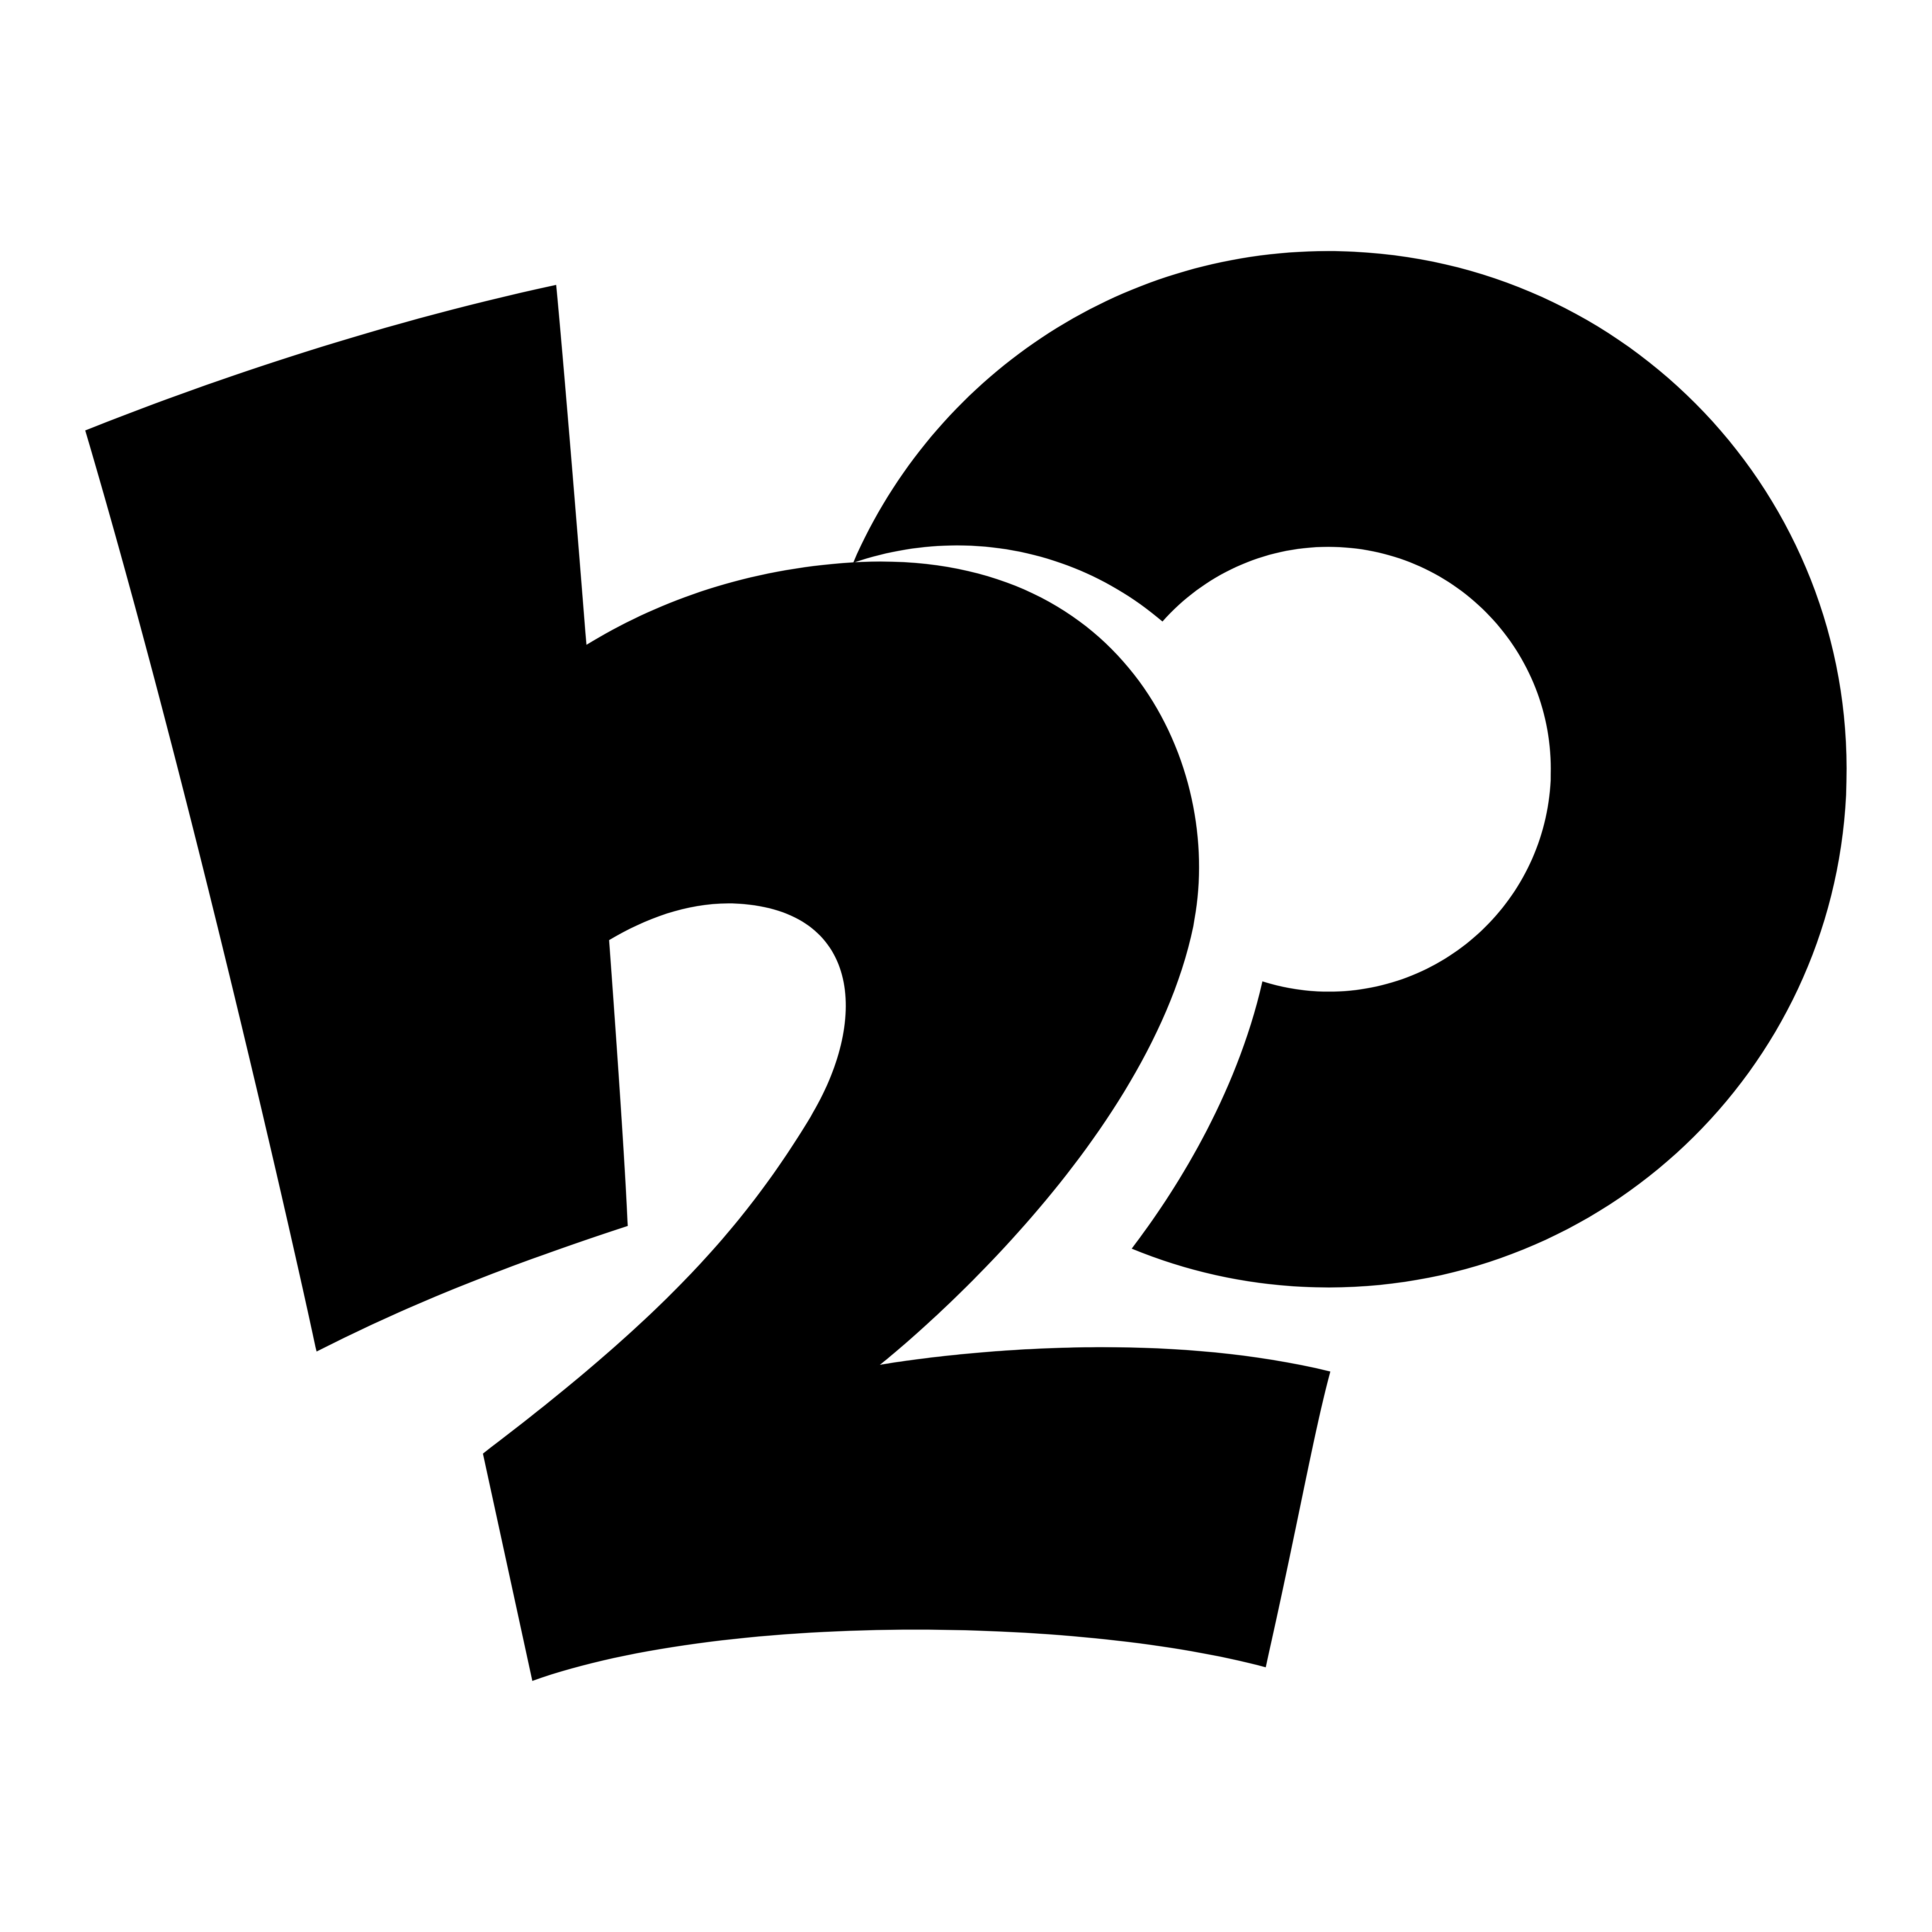 H o. Логотип 2. Н2о логотип. Логотип o. H2o.